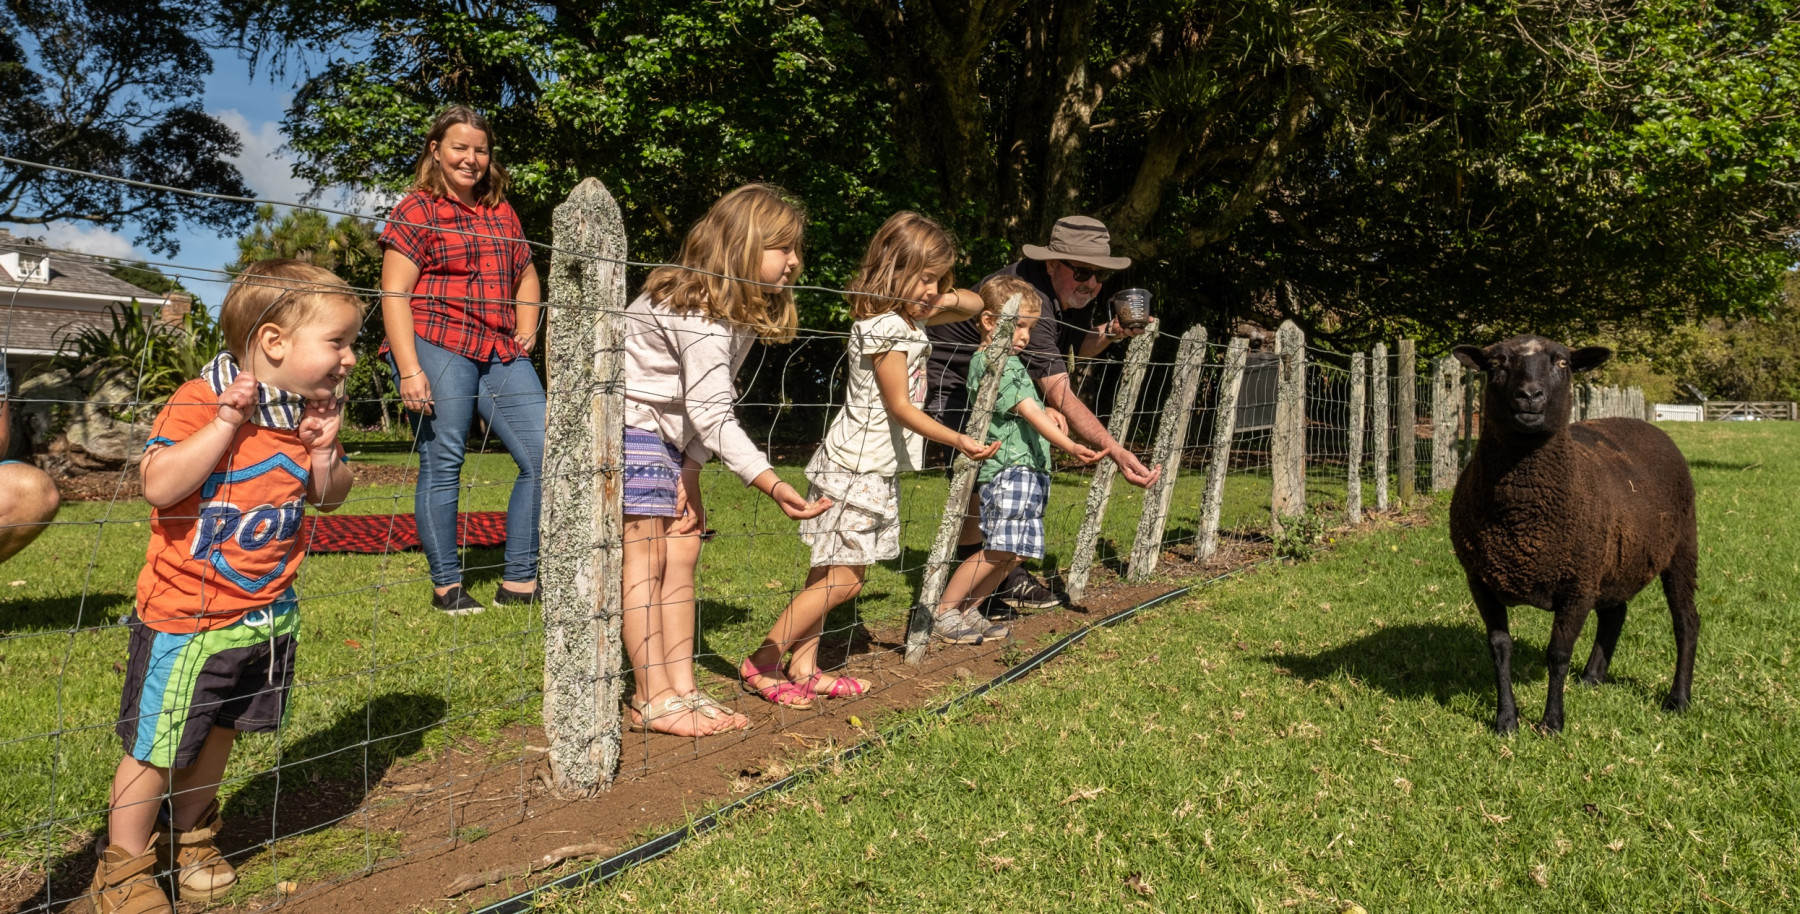 Children lean on a fence watching an intense black sheep.